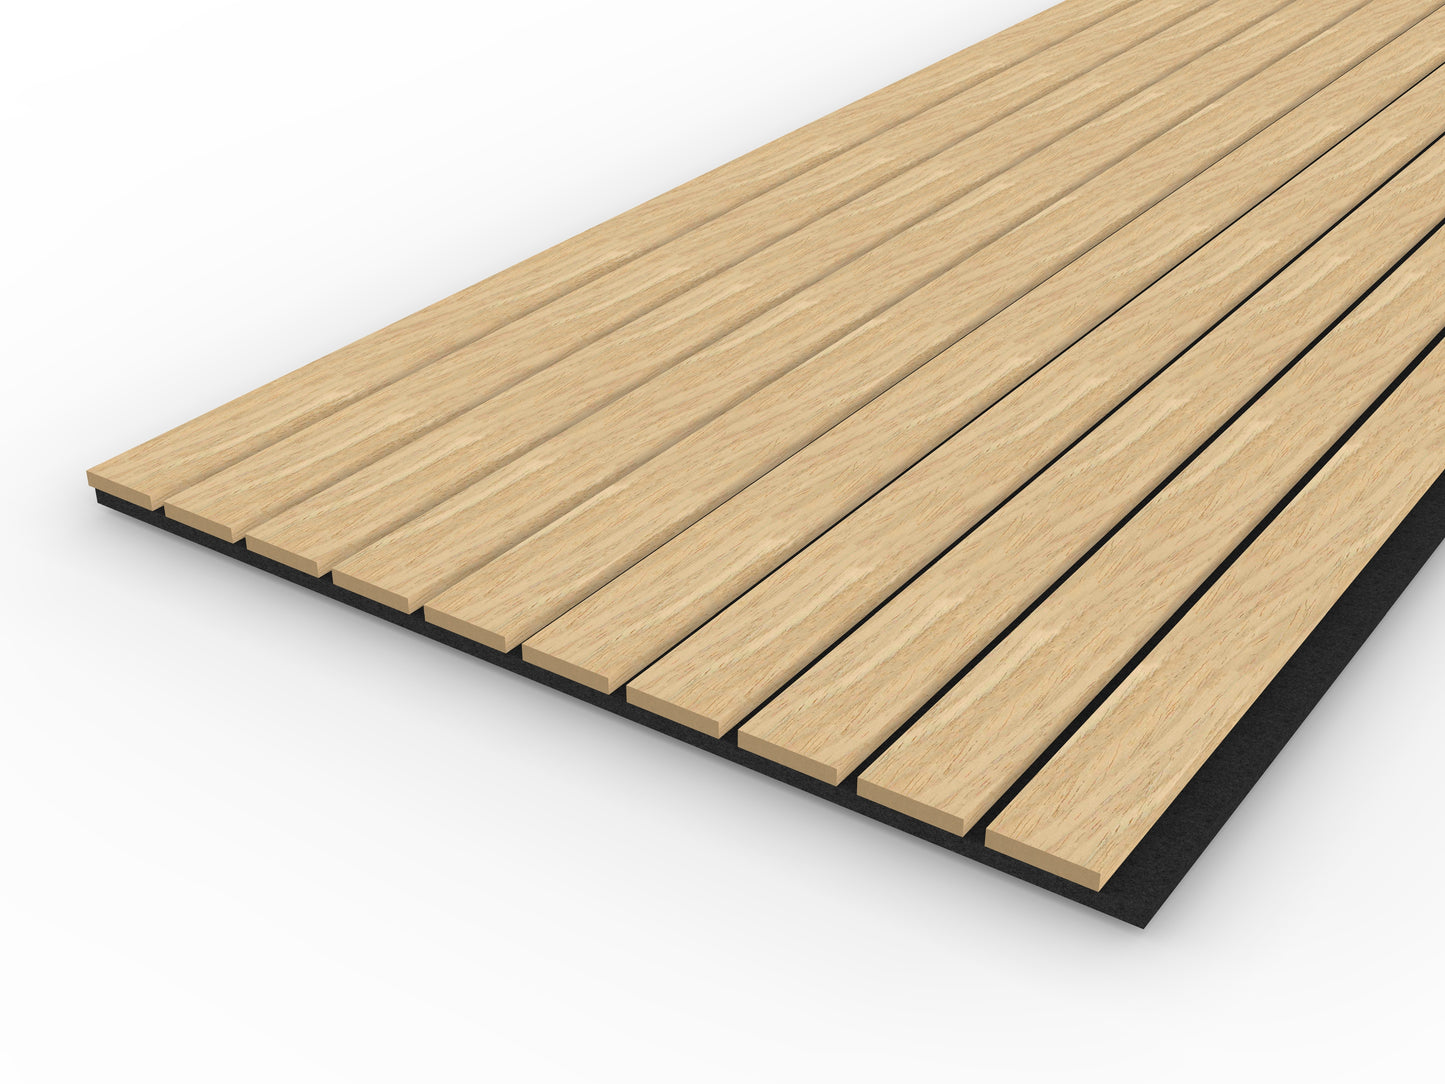 Oak Acoustic Wood Wall Panel Wide Slat Series 2 - 240x60cm